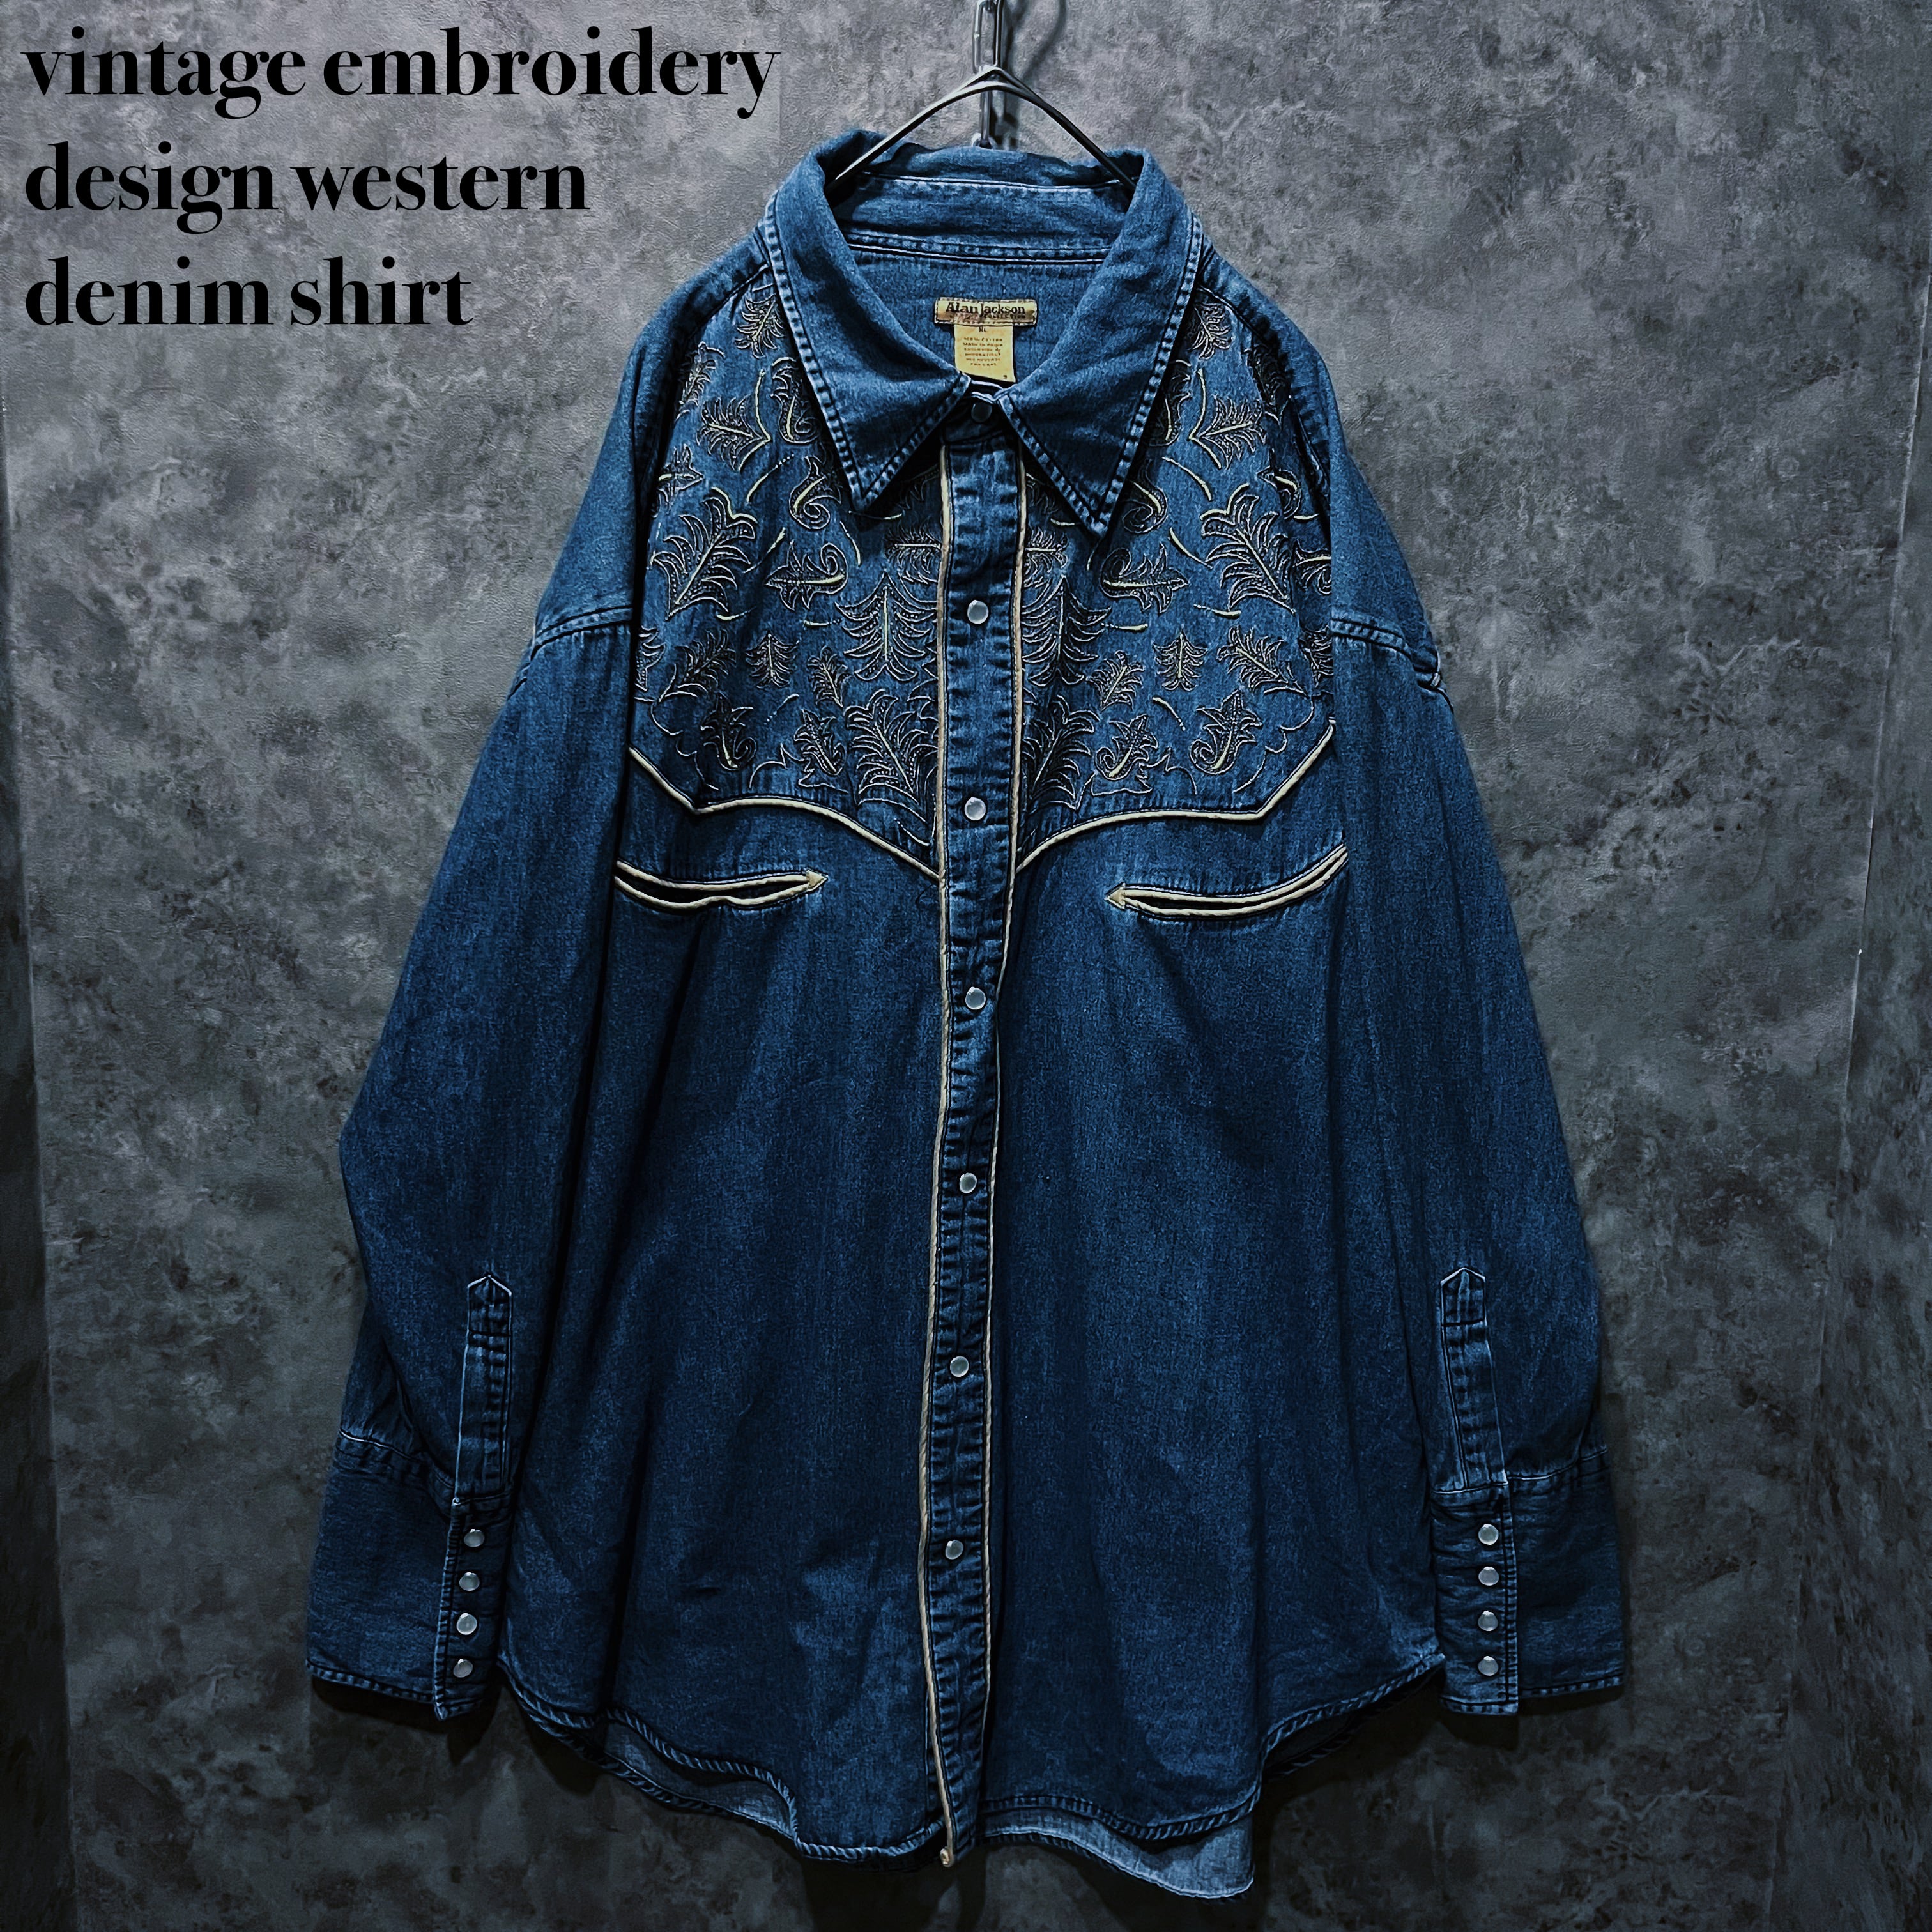 【doppio】vintage embroidery design western denim shirt | ayne powered by BASE